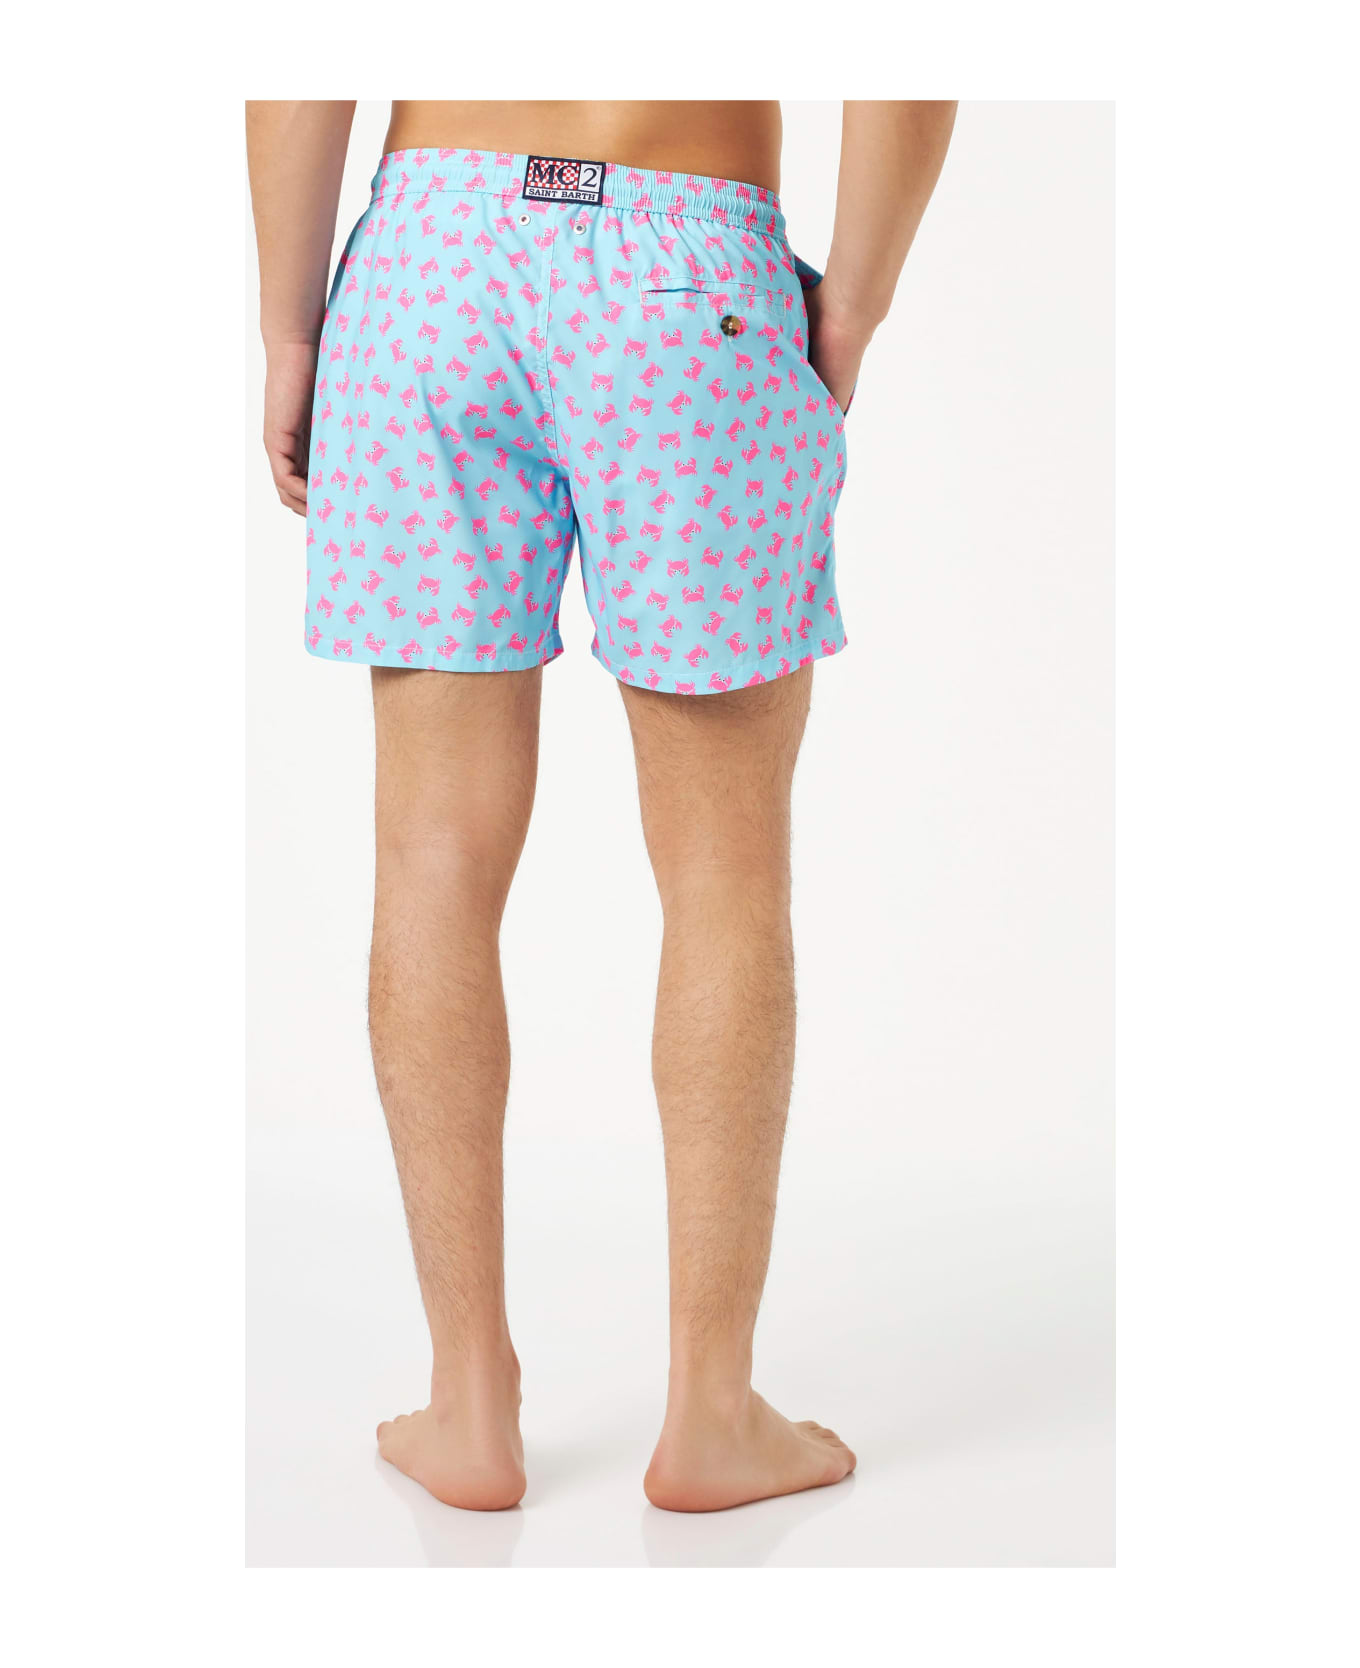 MC2 Saint Barth Man Light Fabric Comfort Swim Shorts With Crabs Print - SKY